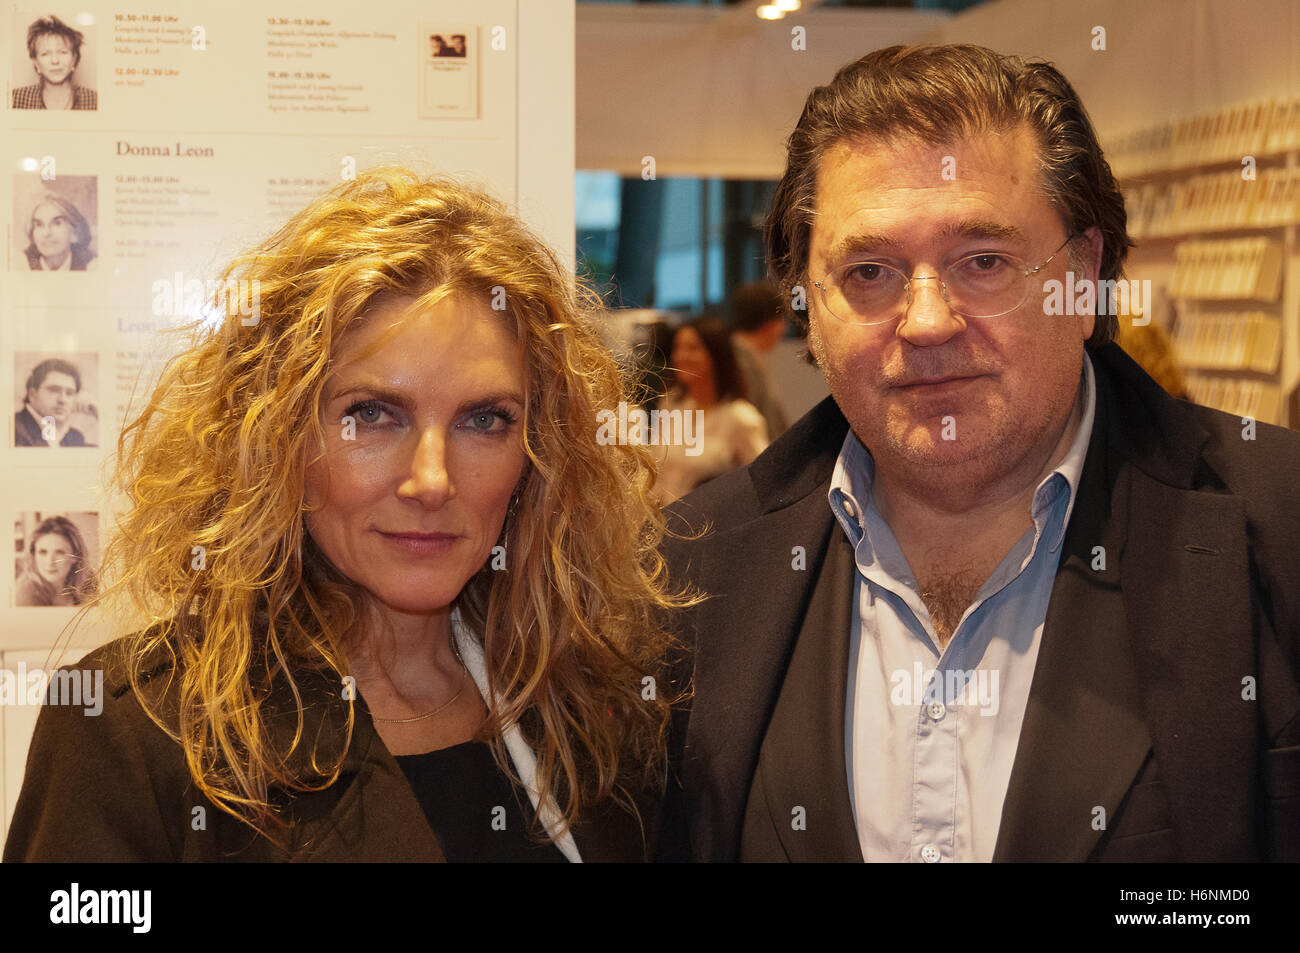 Jessica Durchlacher, Leon de Winter at publishers booth, Frankfurt Bookfair 2016 Stock Photo